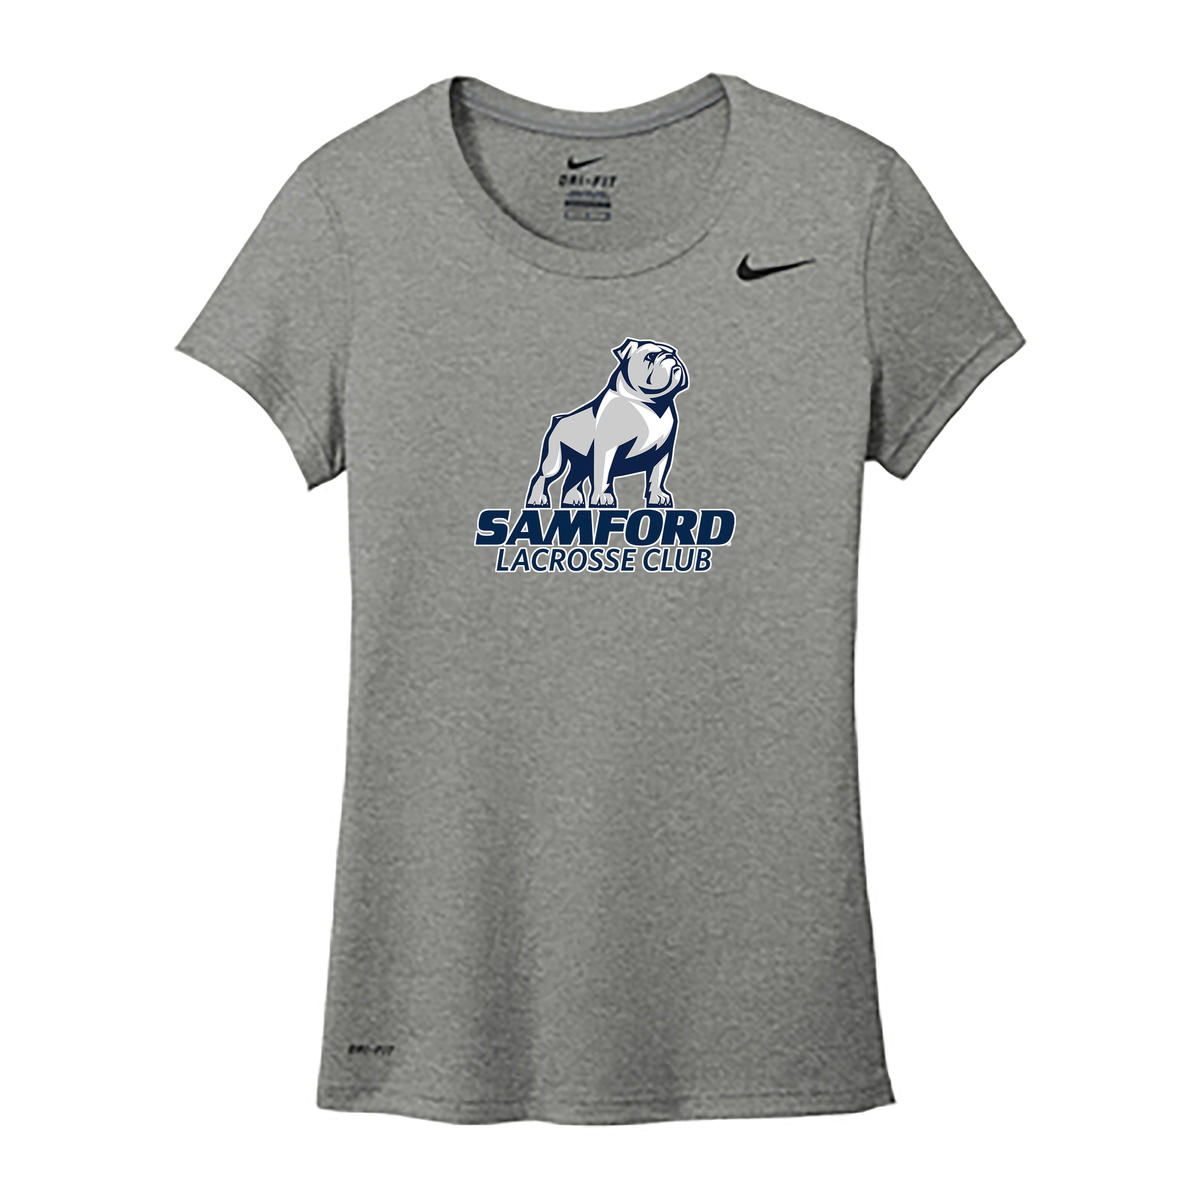 Samford University Lacrosse Club Nike Ladies Legend Tee